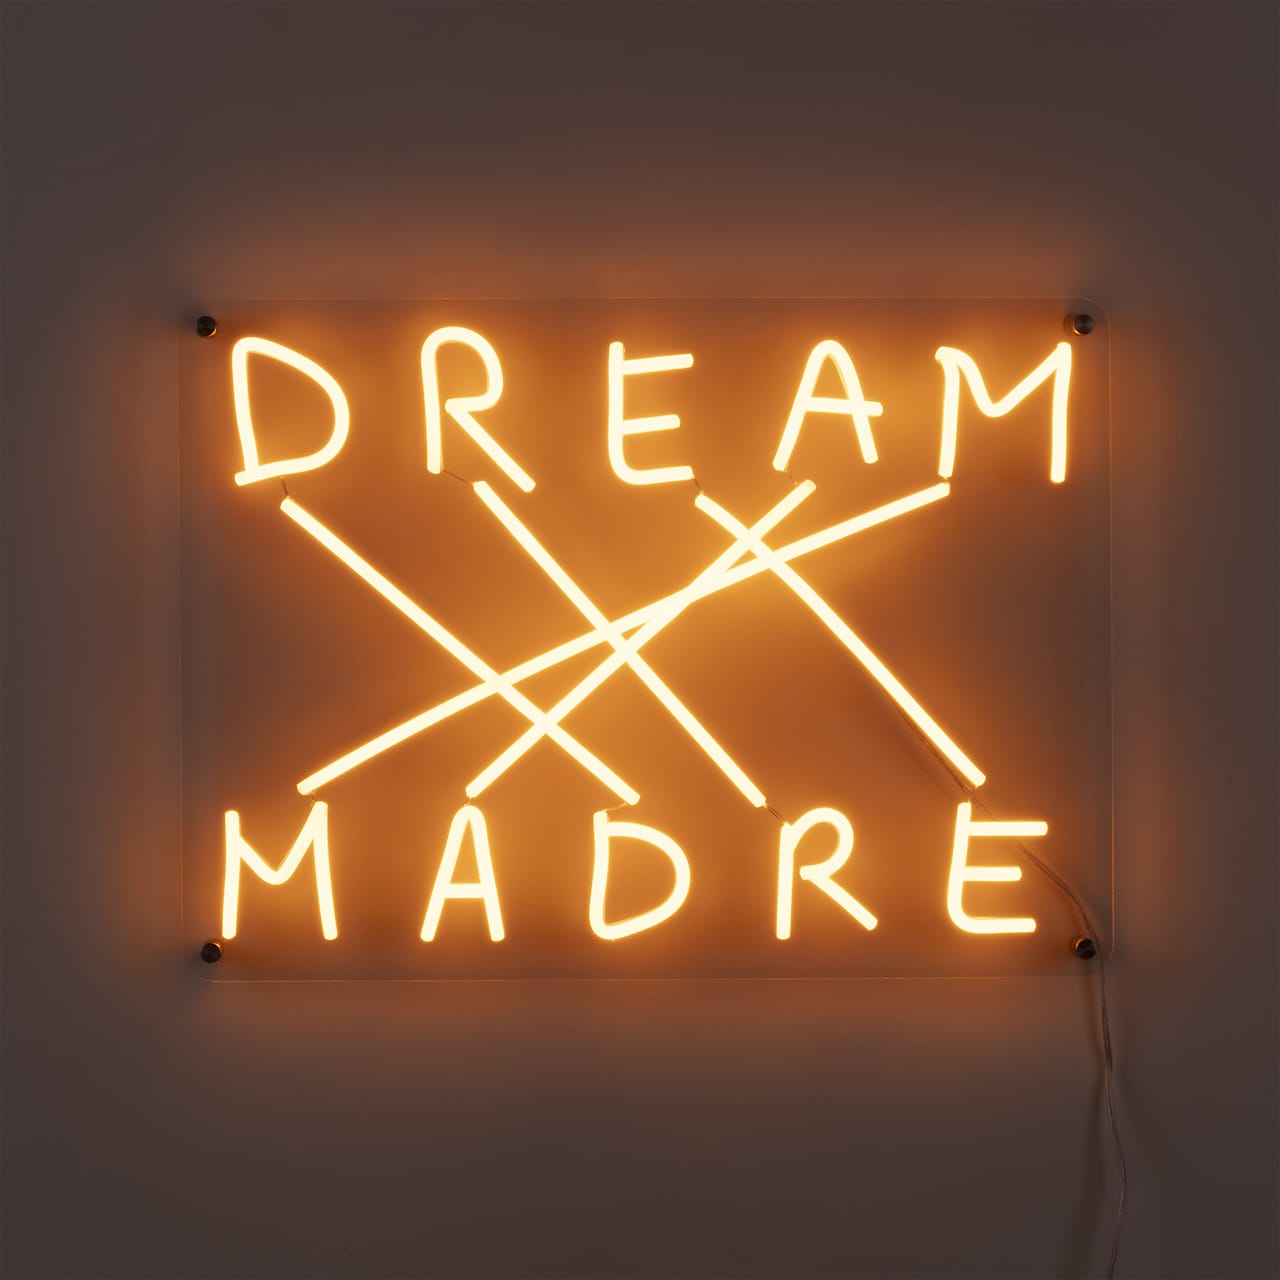 Led Lamp Dream - Madre